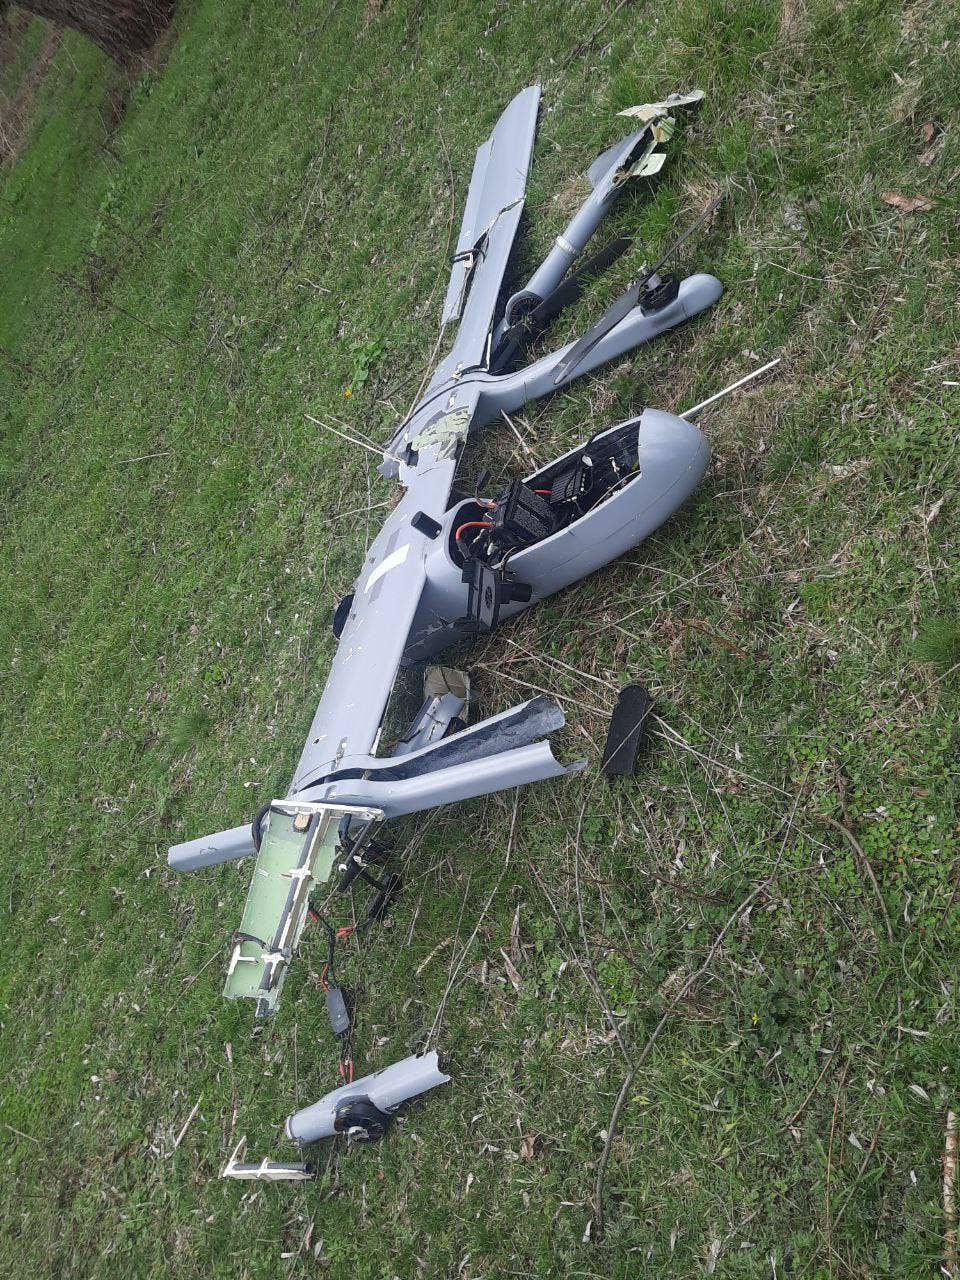 This Ukrainian Poseidon H10 drone was shot down in Belgorod Oblast, its governor said. (Vyacheslav Gladkov Telegram photo)